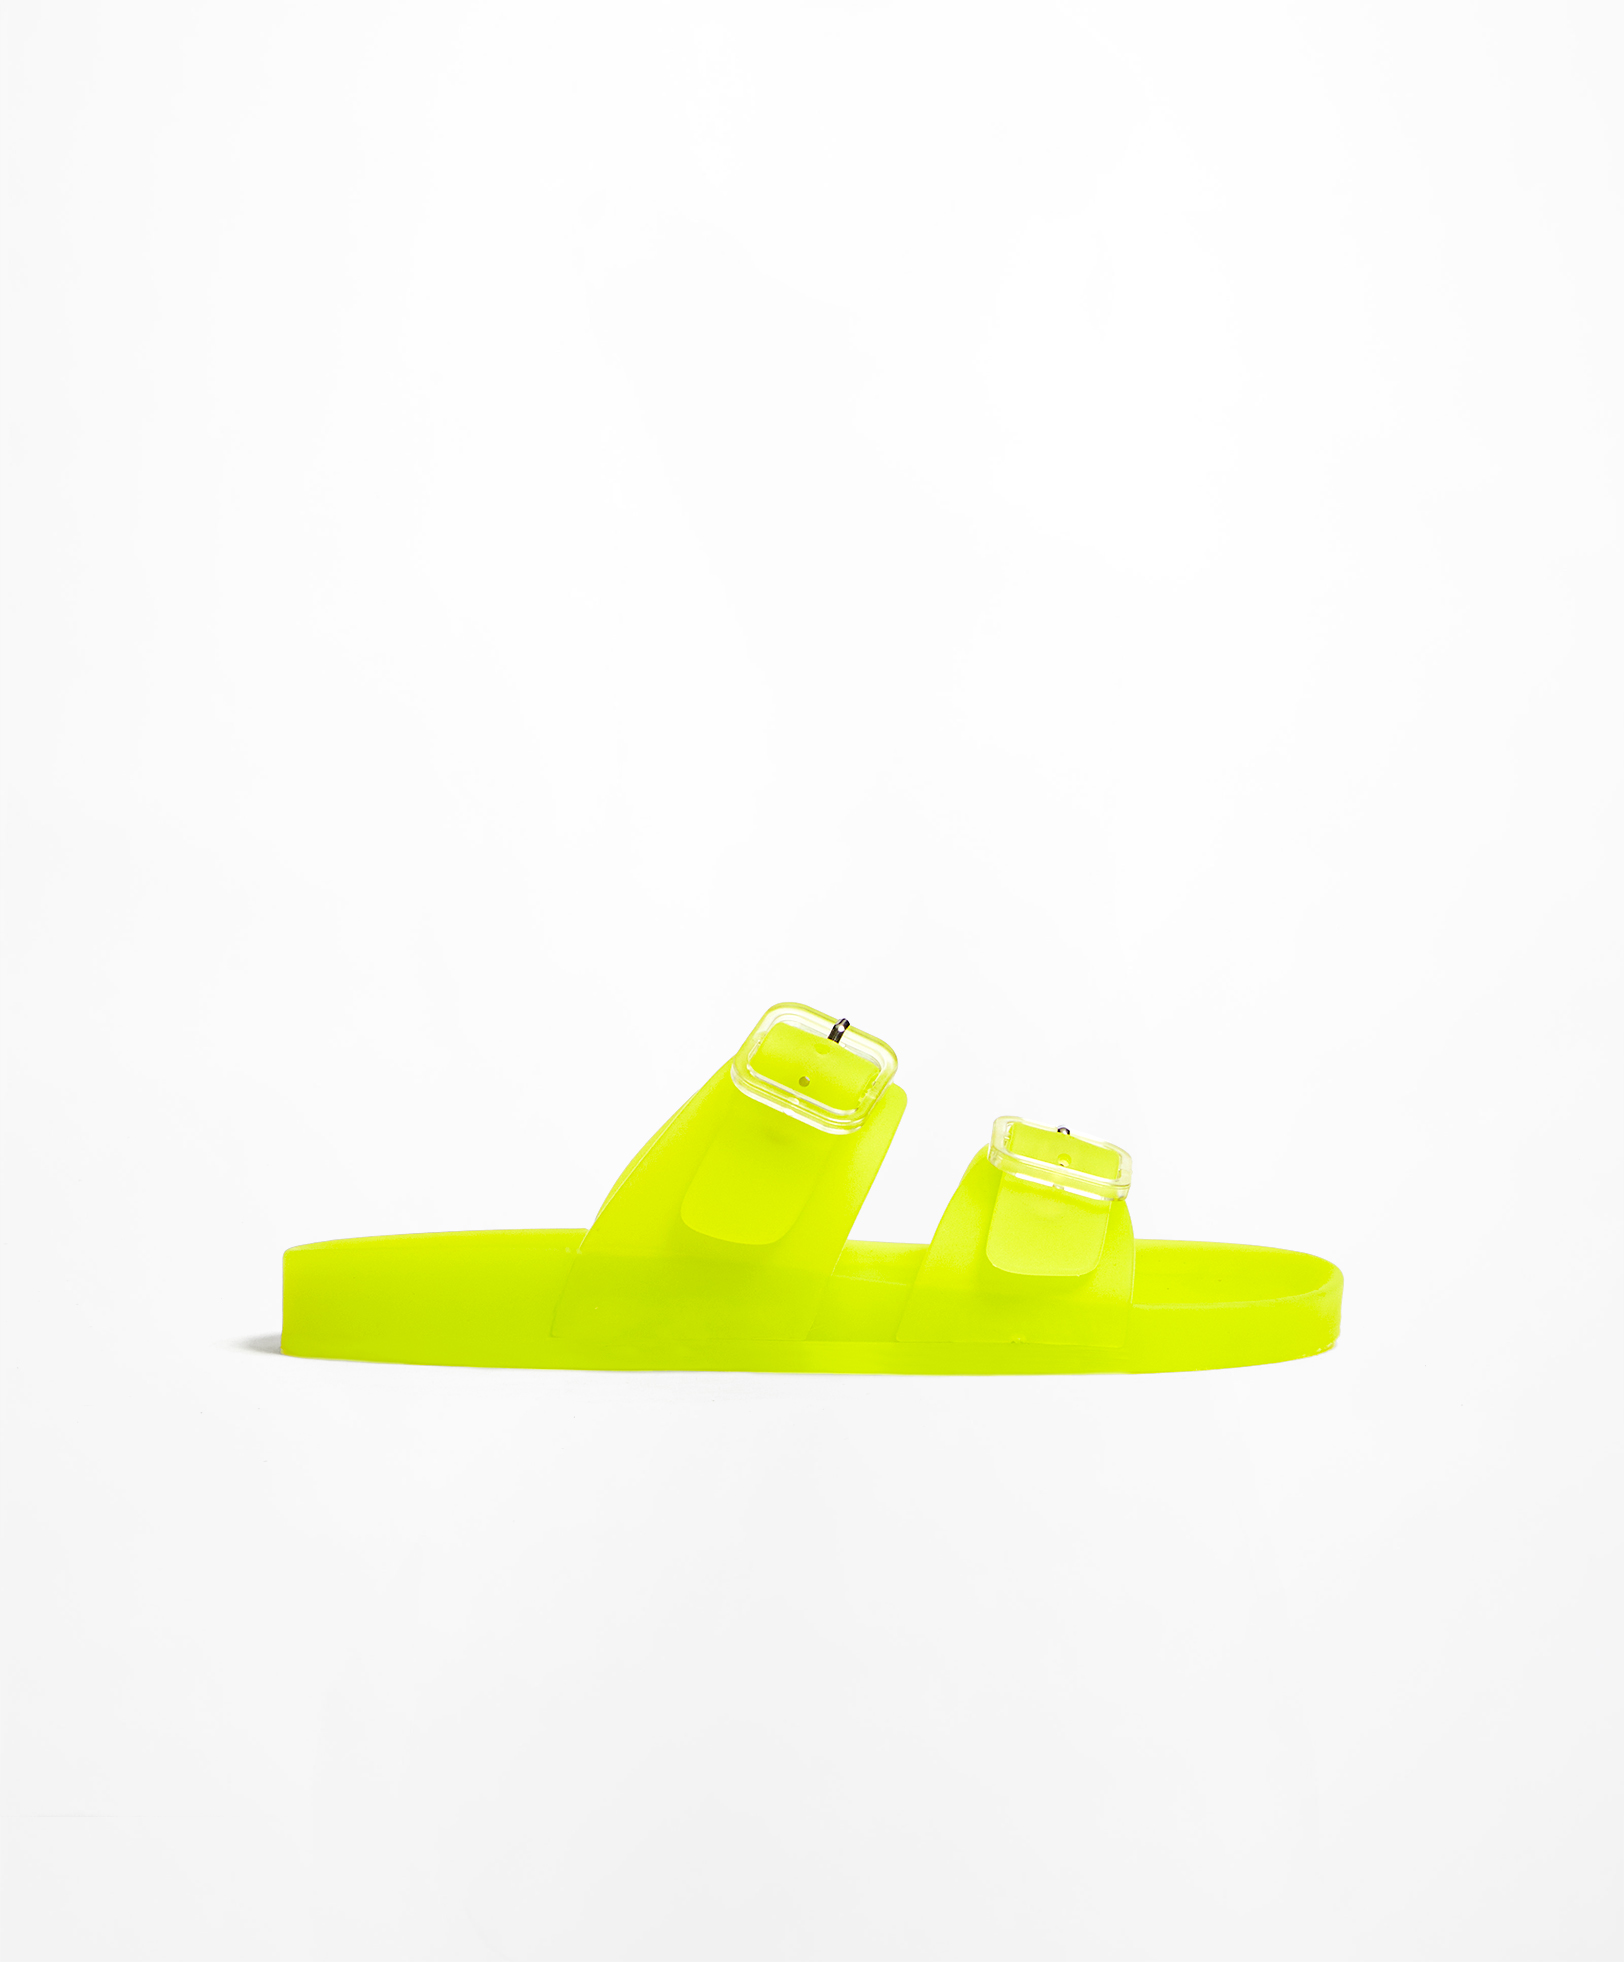 Translucent moulded beach sandals